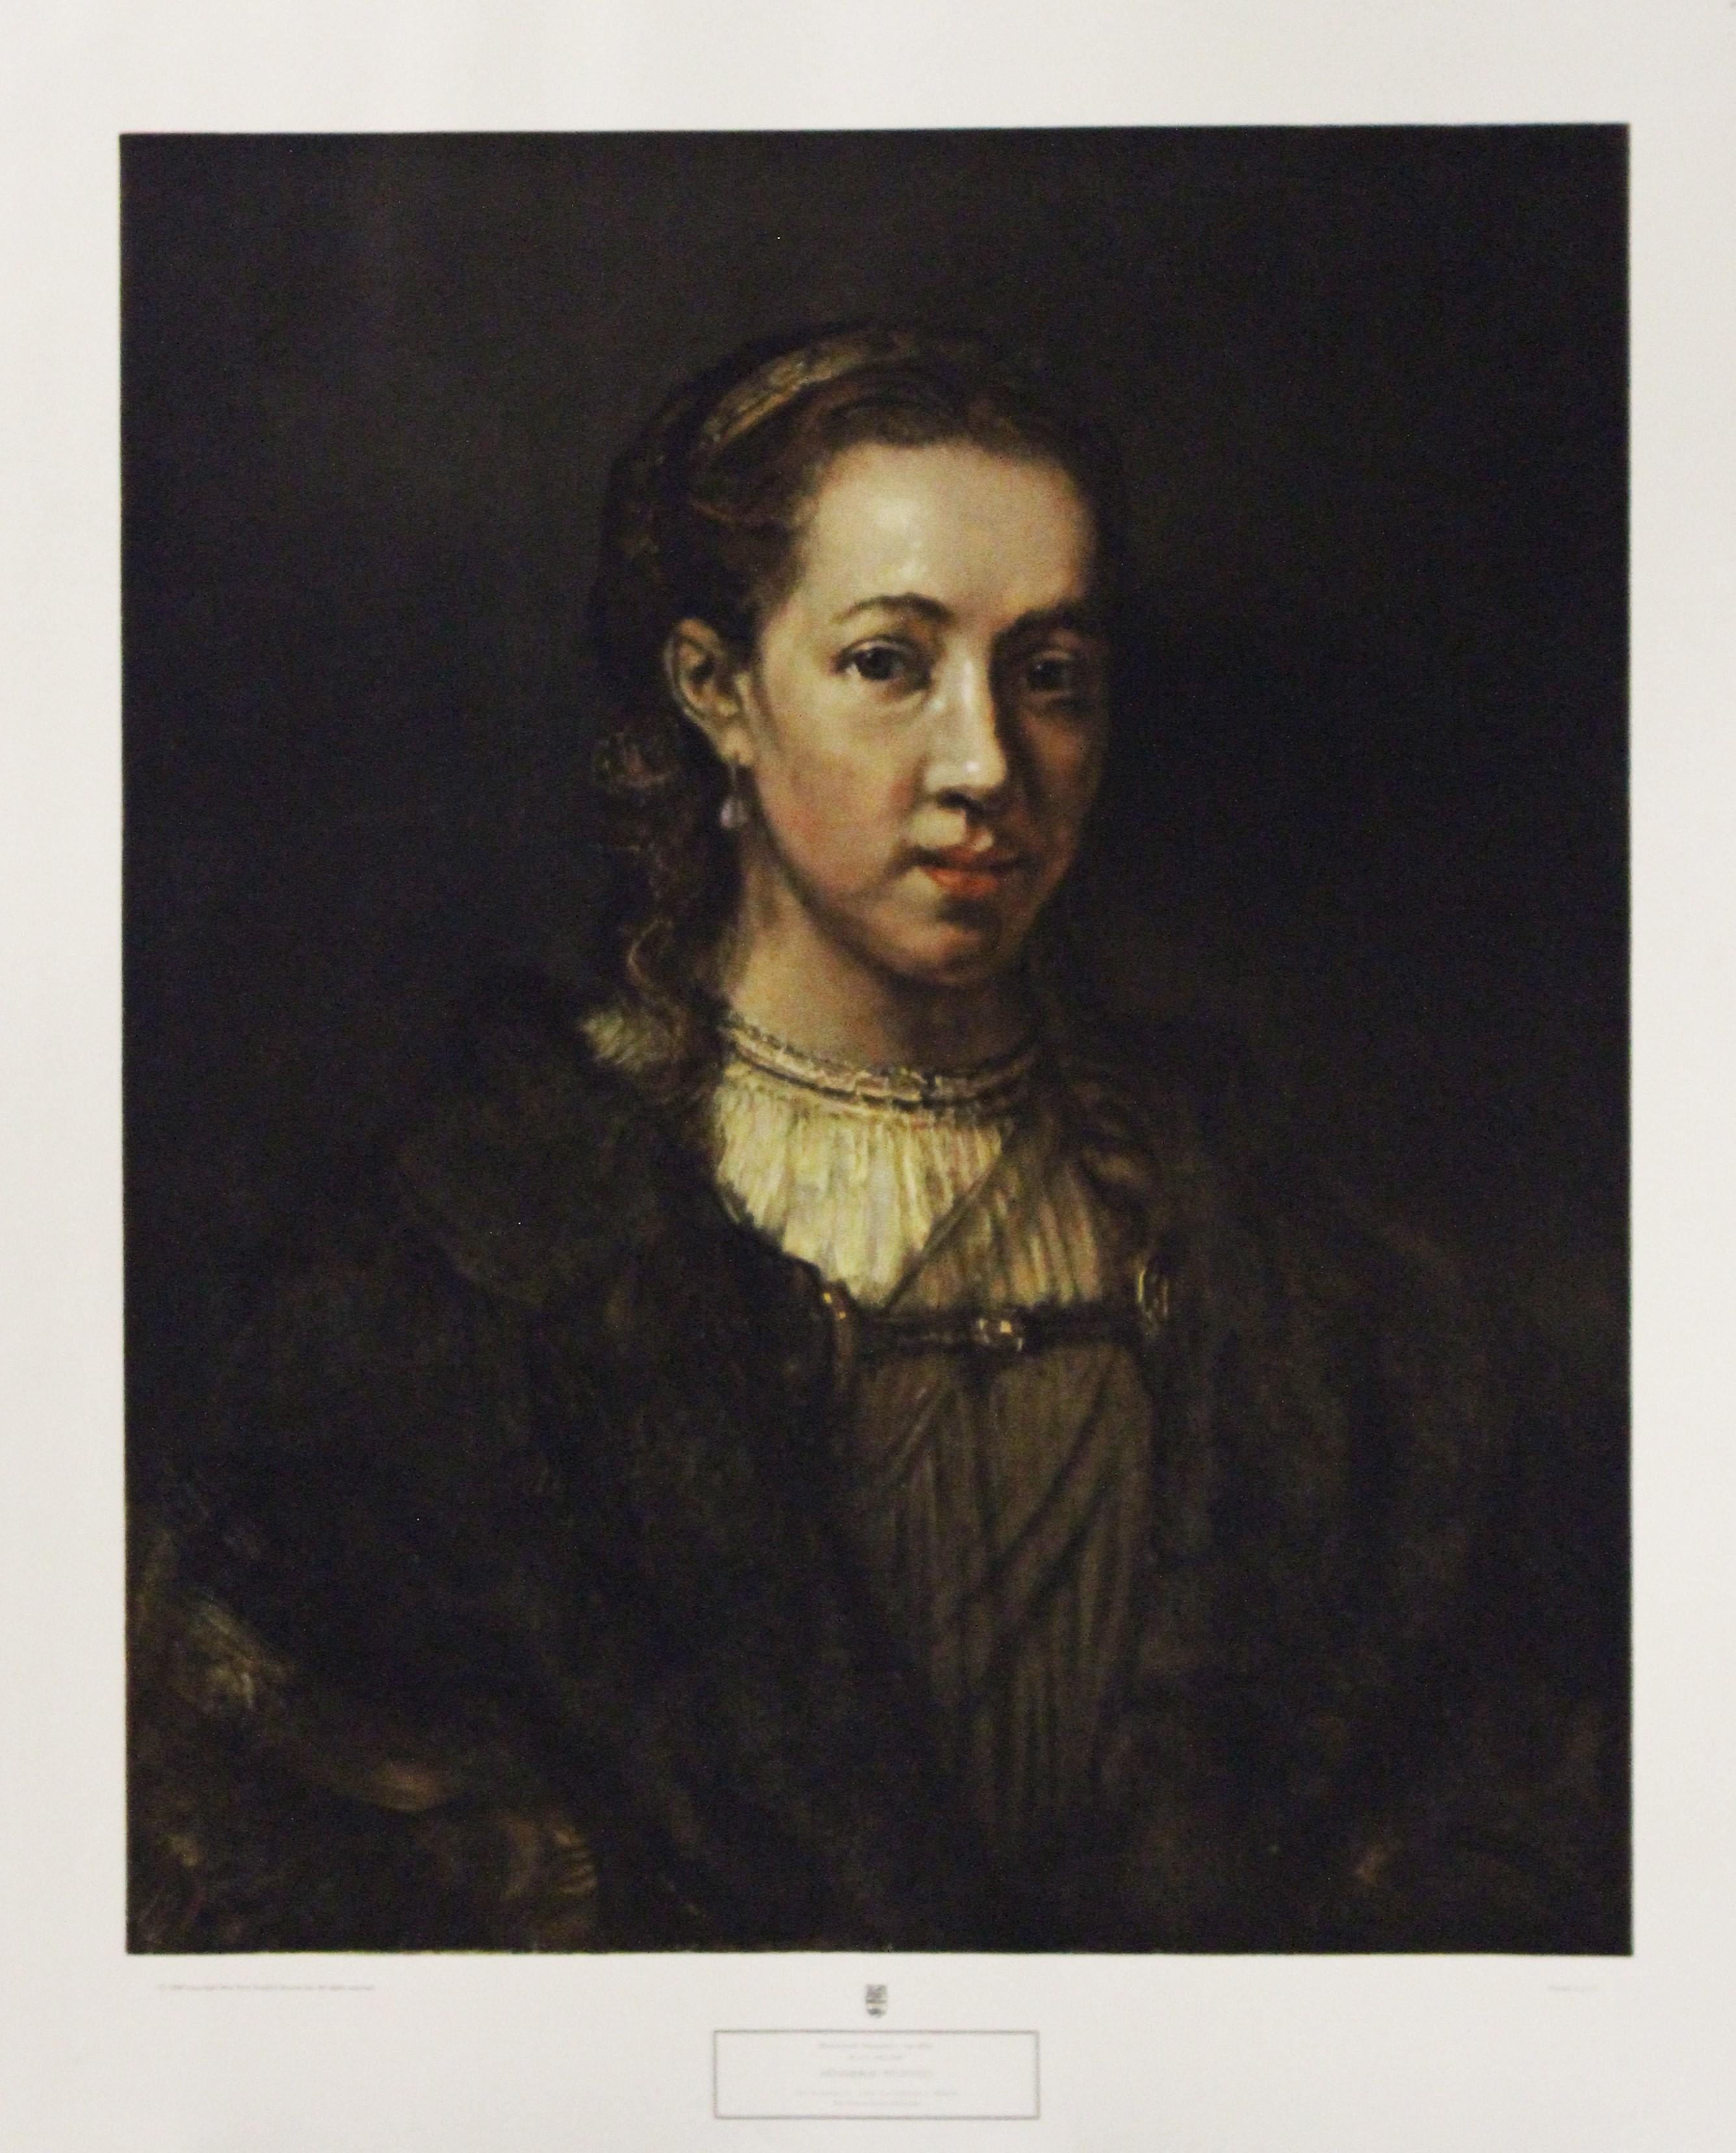 (After) Rembrandt van Rijn  Portrait Print - Hendrikje Stoffels-Poster. New York Graphic Society, Ltd. 